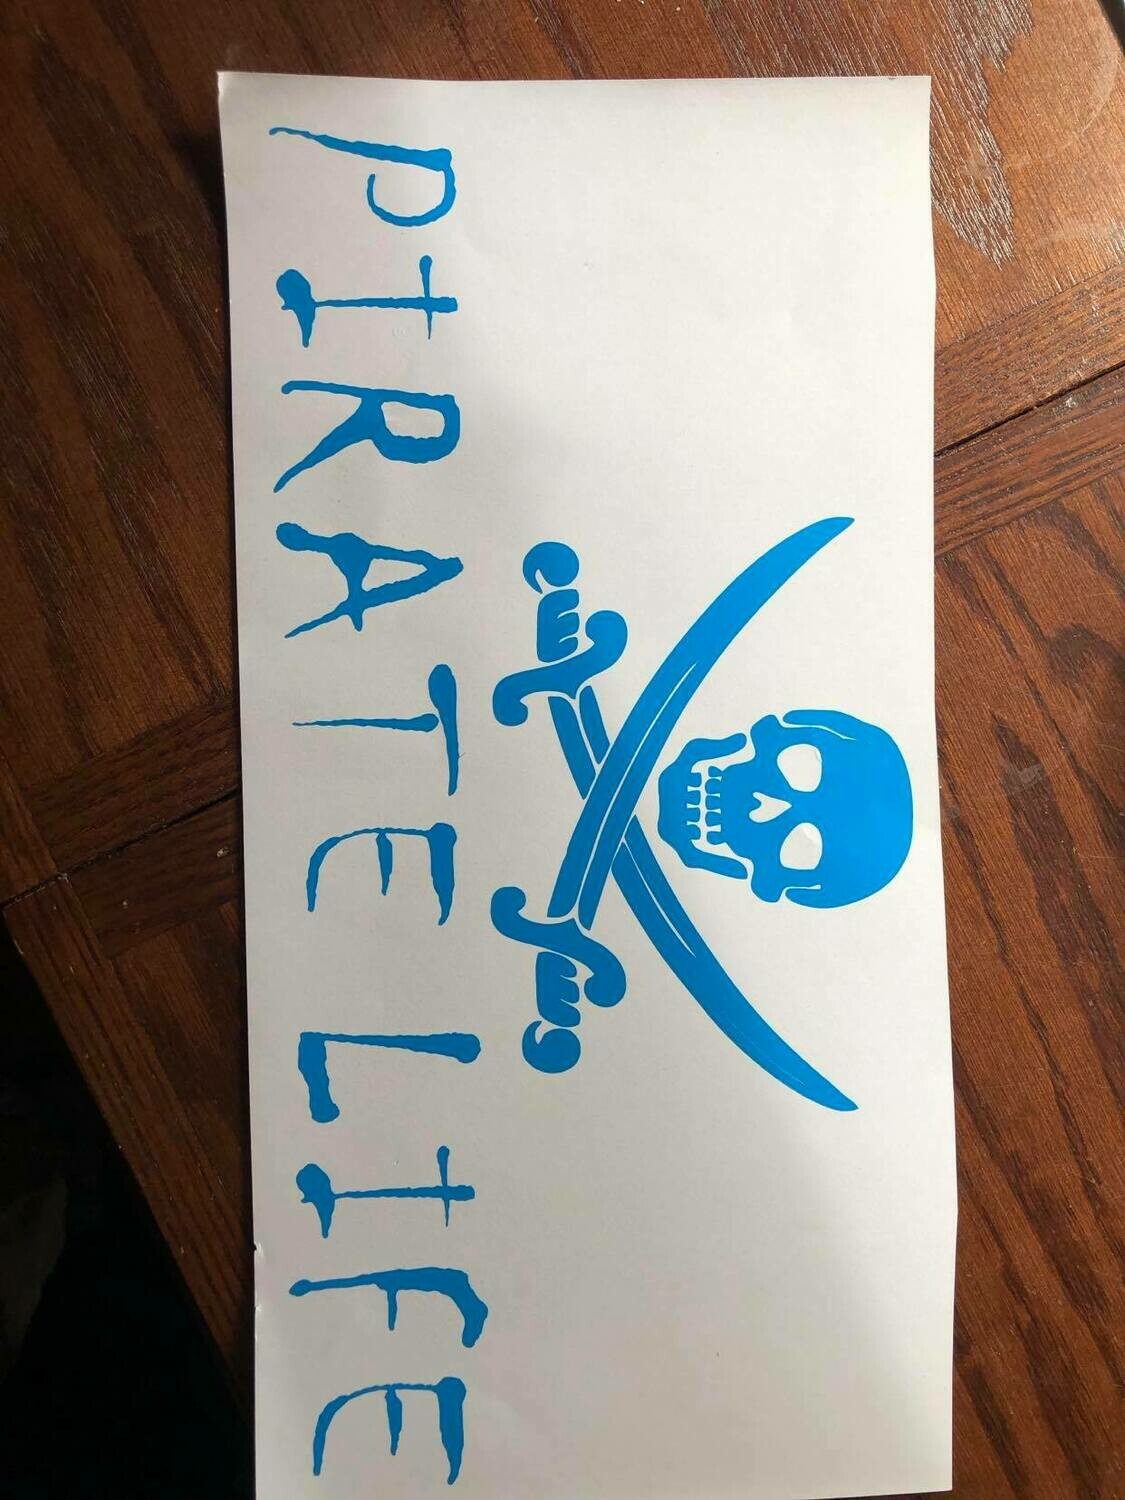 Pirate Life sticker